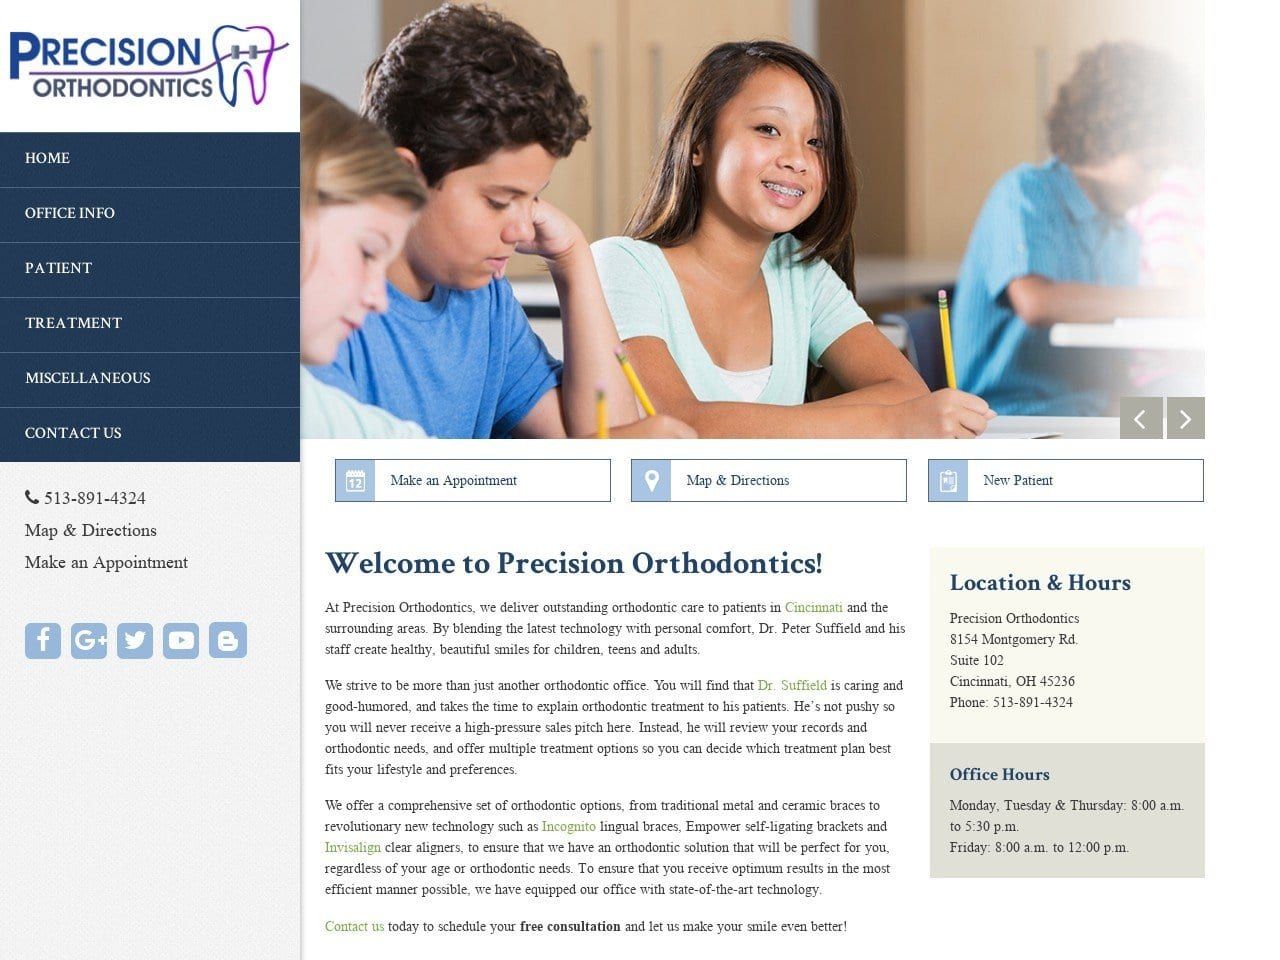 Suffield Orthodontics Website Screenshot from suffieldorthodontics.com